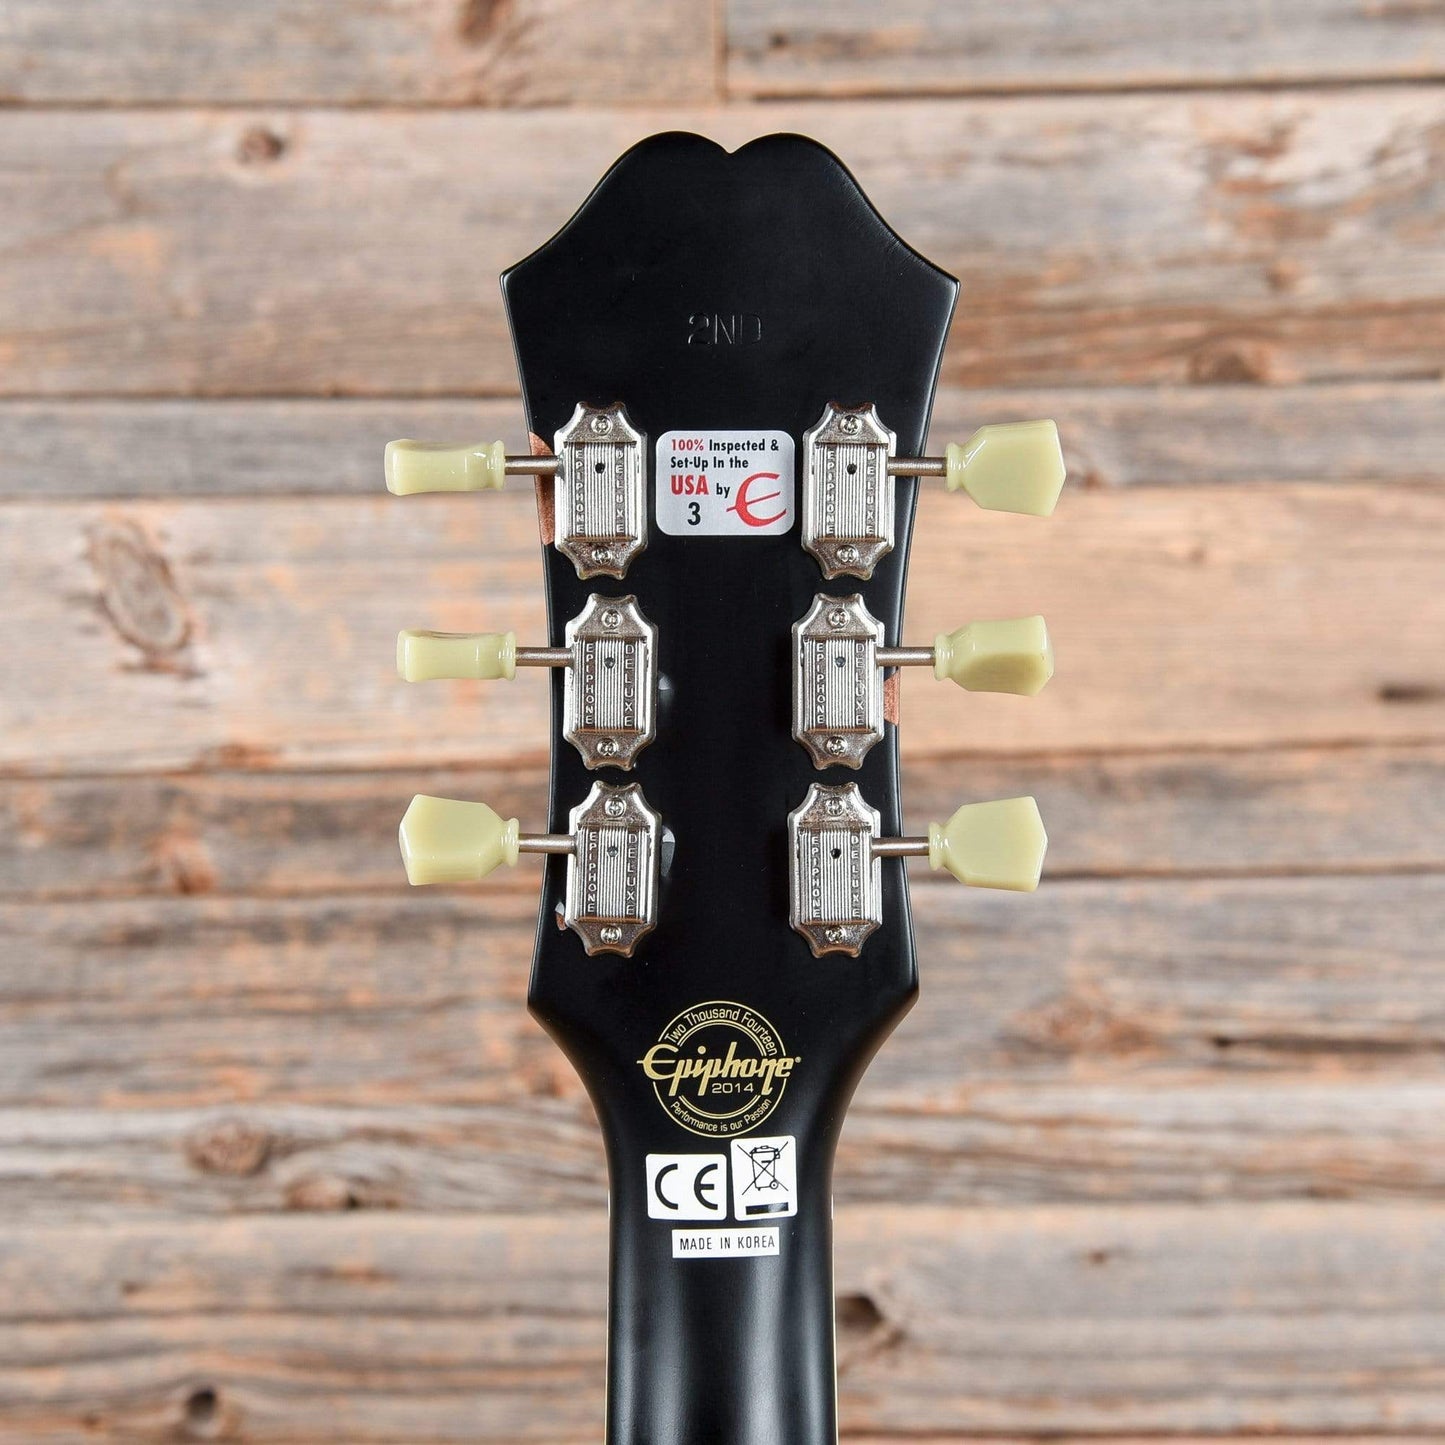 Epiphone ES-175 Premium Black 2014 Electric Guitars / Hollow Body